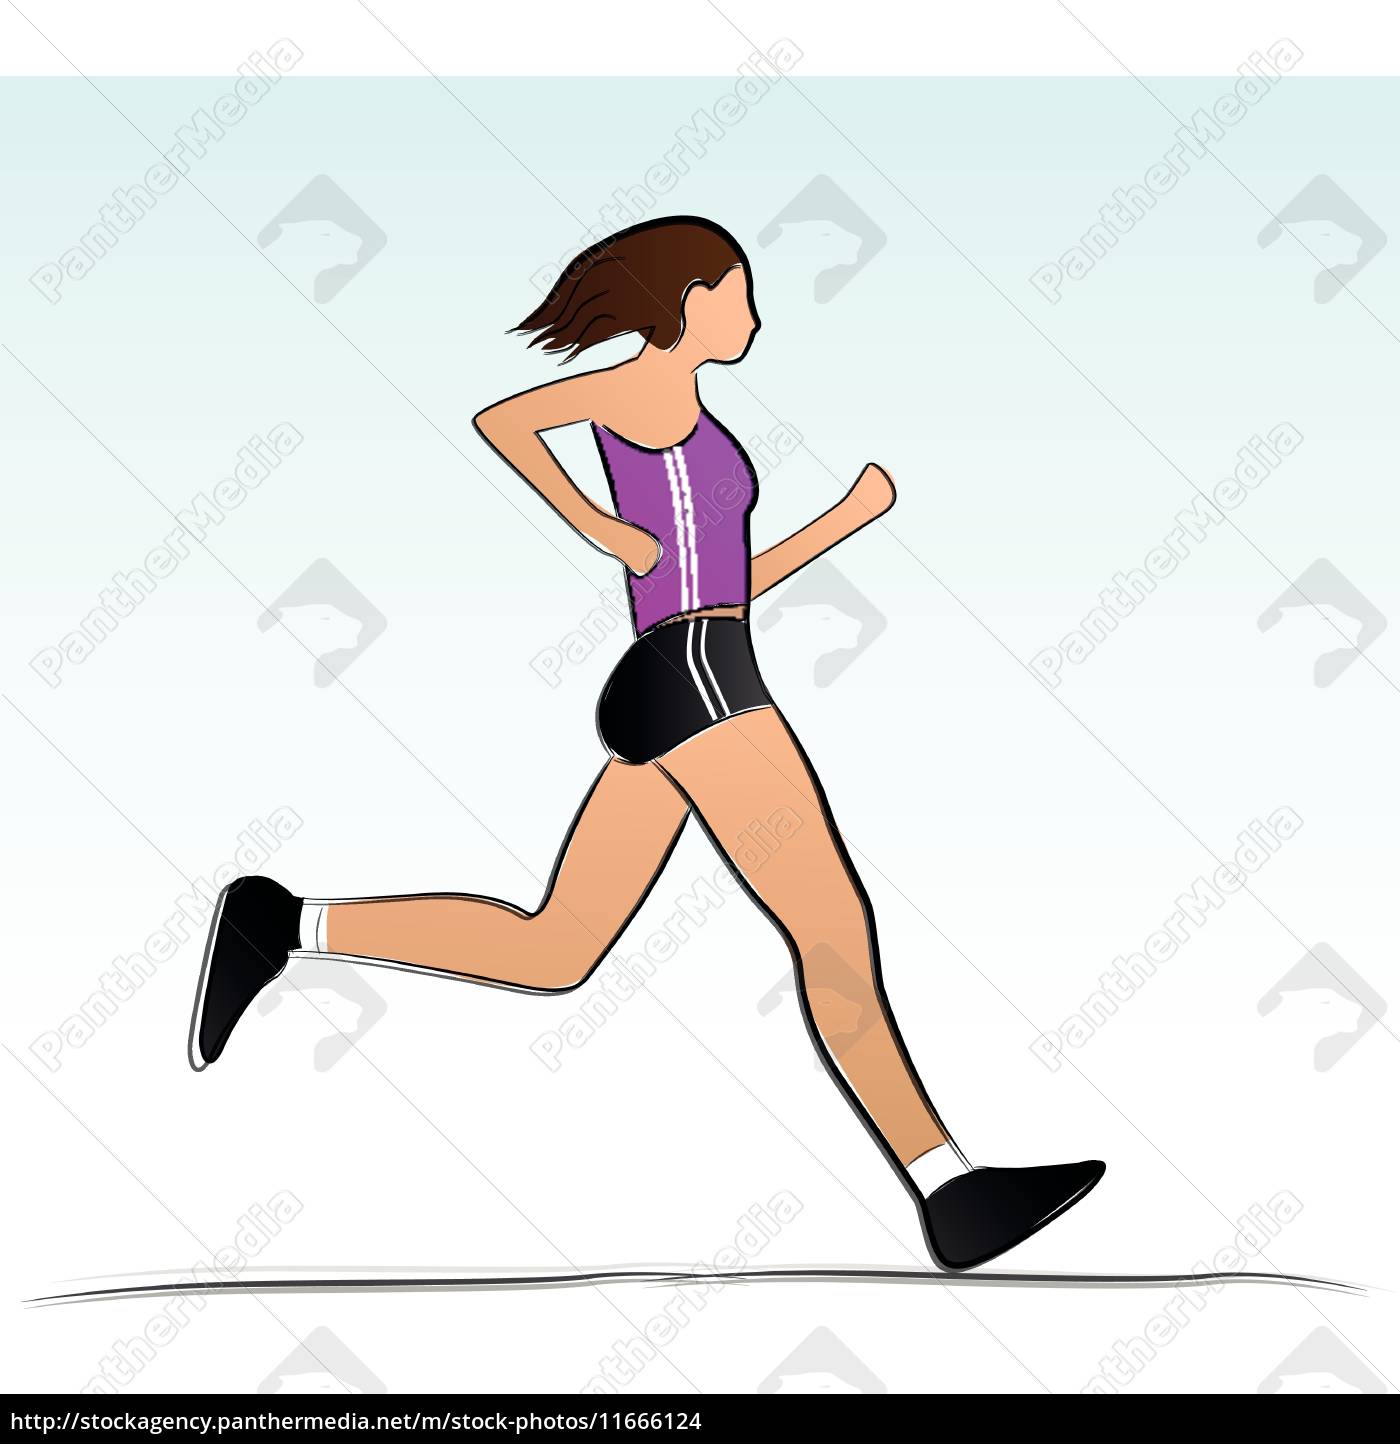 Mujer Corriendo · Foto de stock gratuita